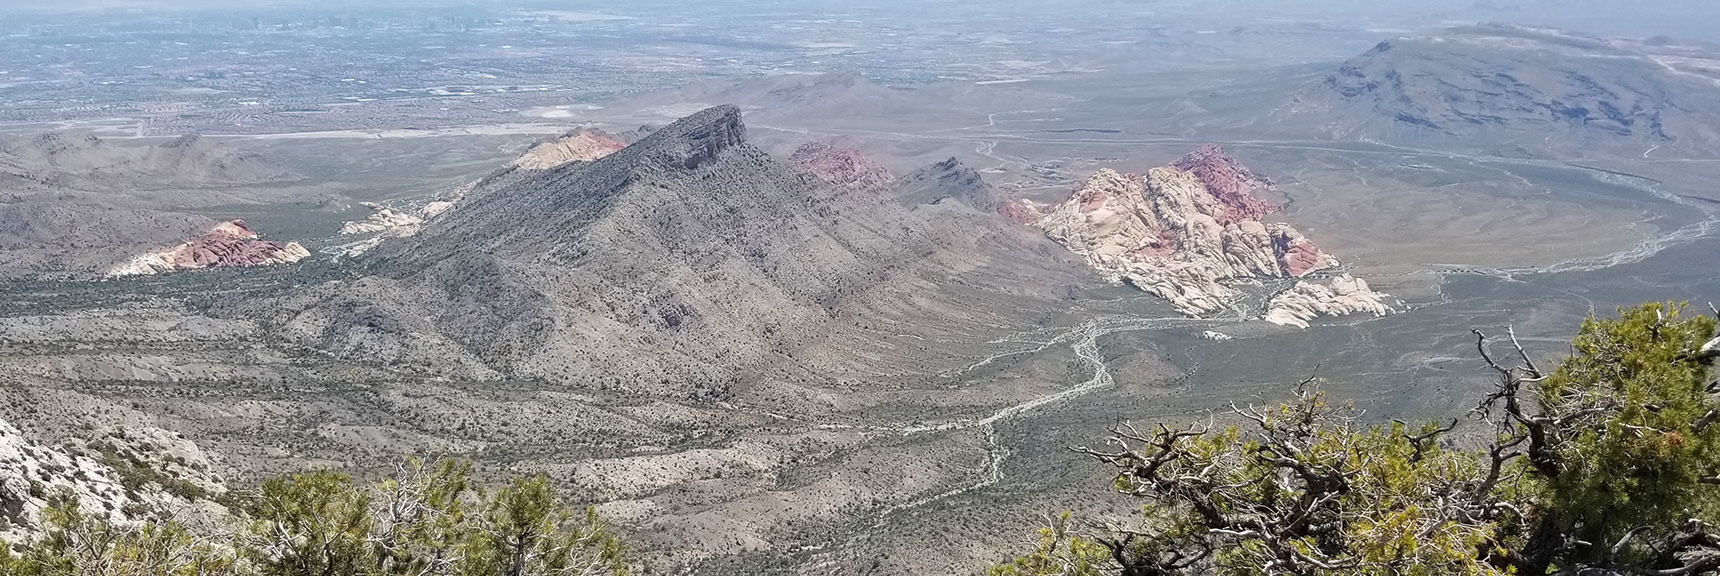 Turtlehead Peak View from Keystone Thrust, La Madre Mountain Wilderness, Nevada